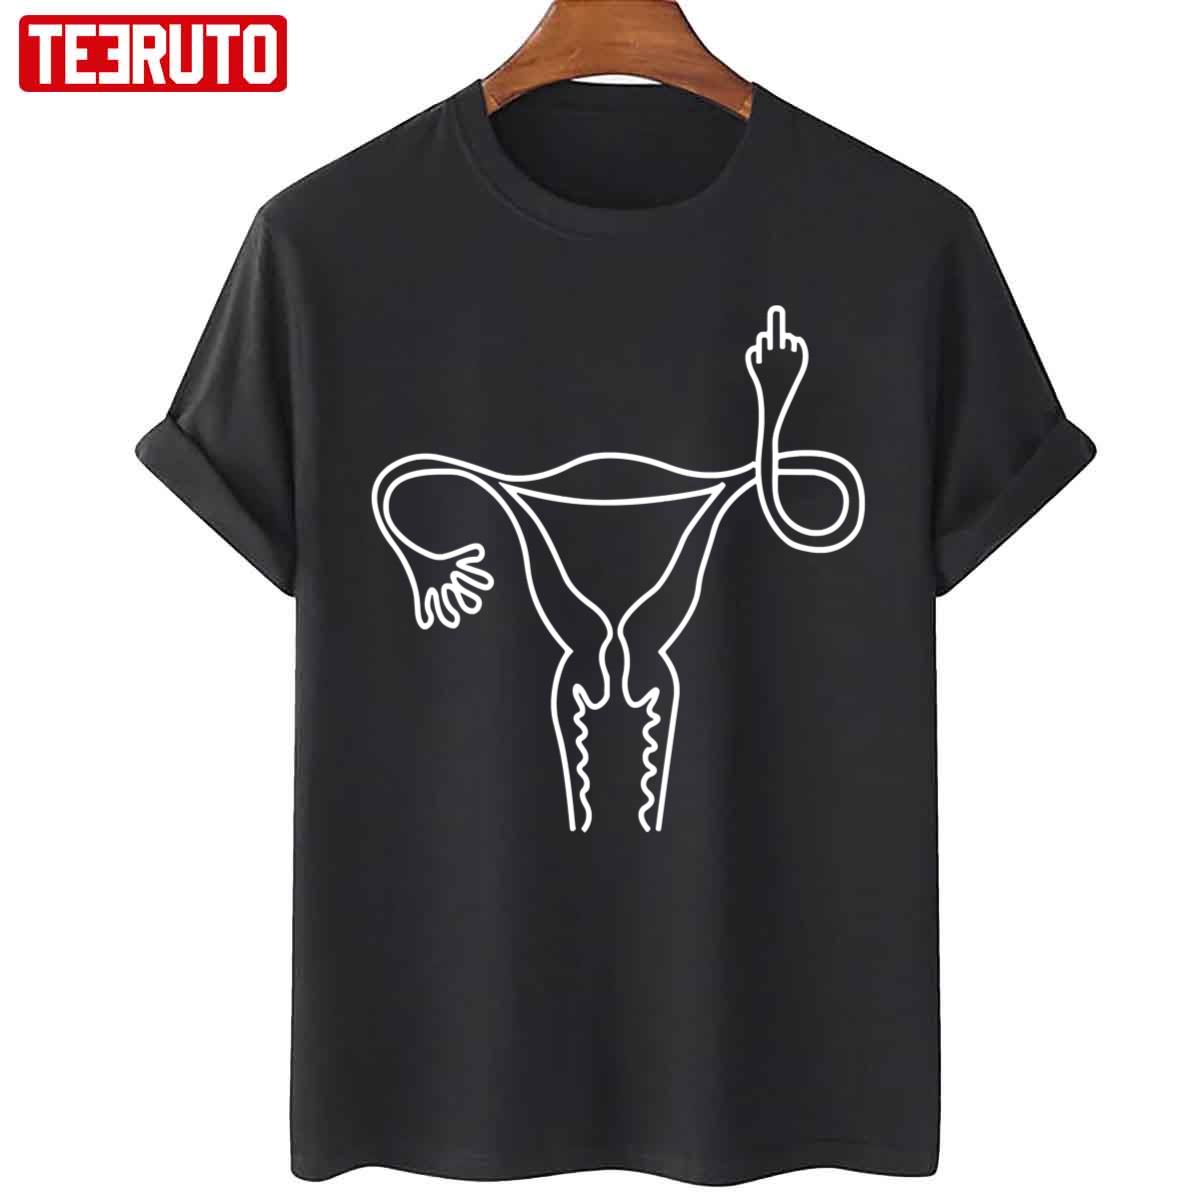 Uterus Reproductive Rights Women’s Feminism Middle Finger Sweatshirt